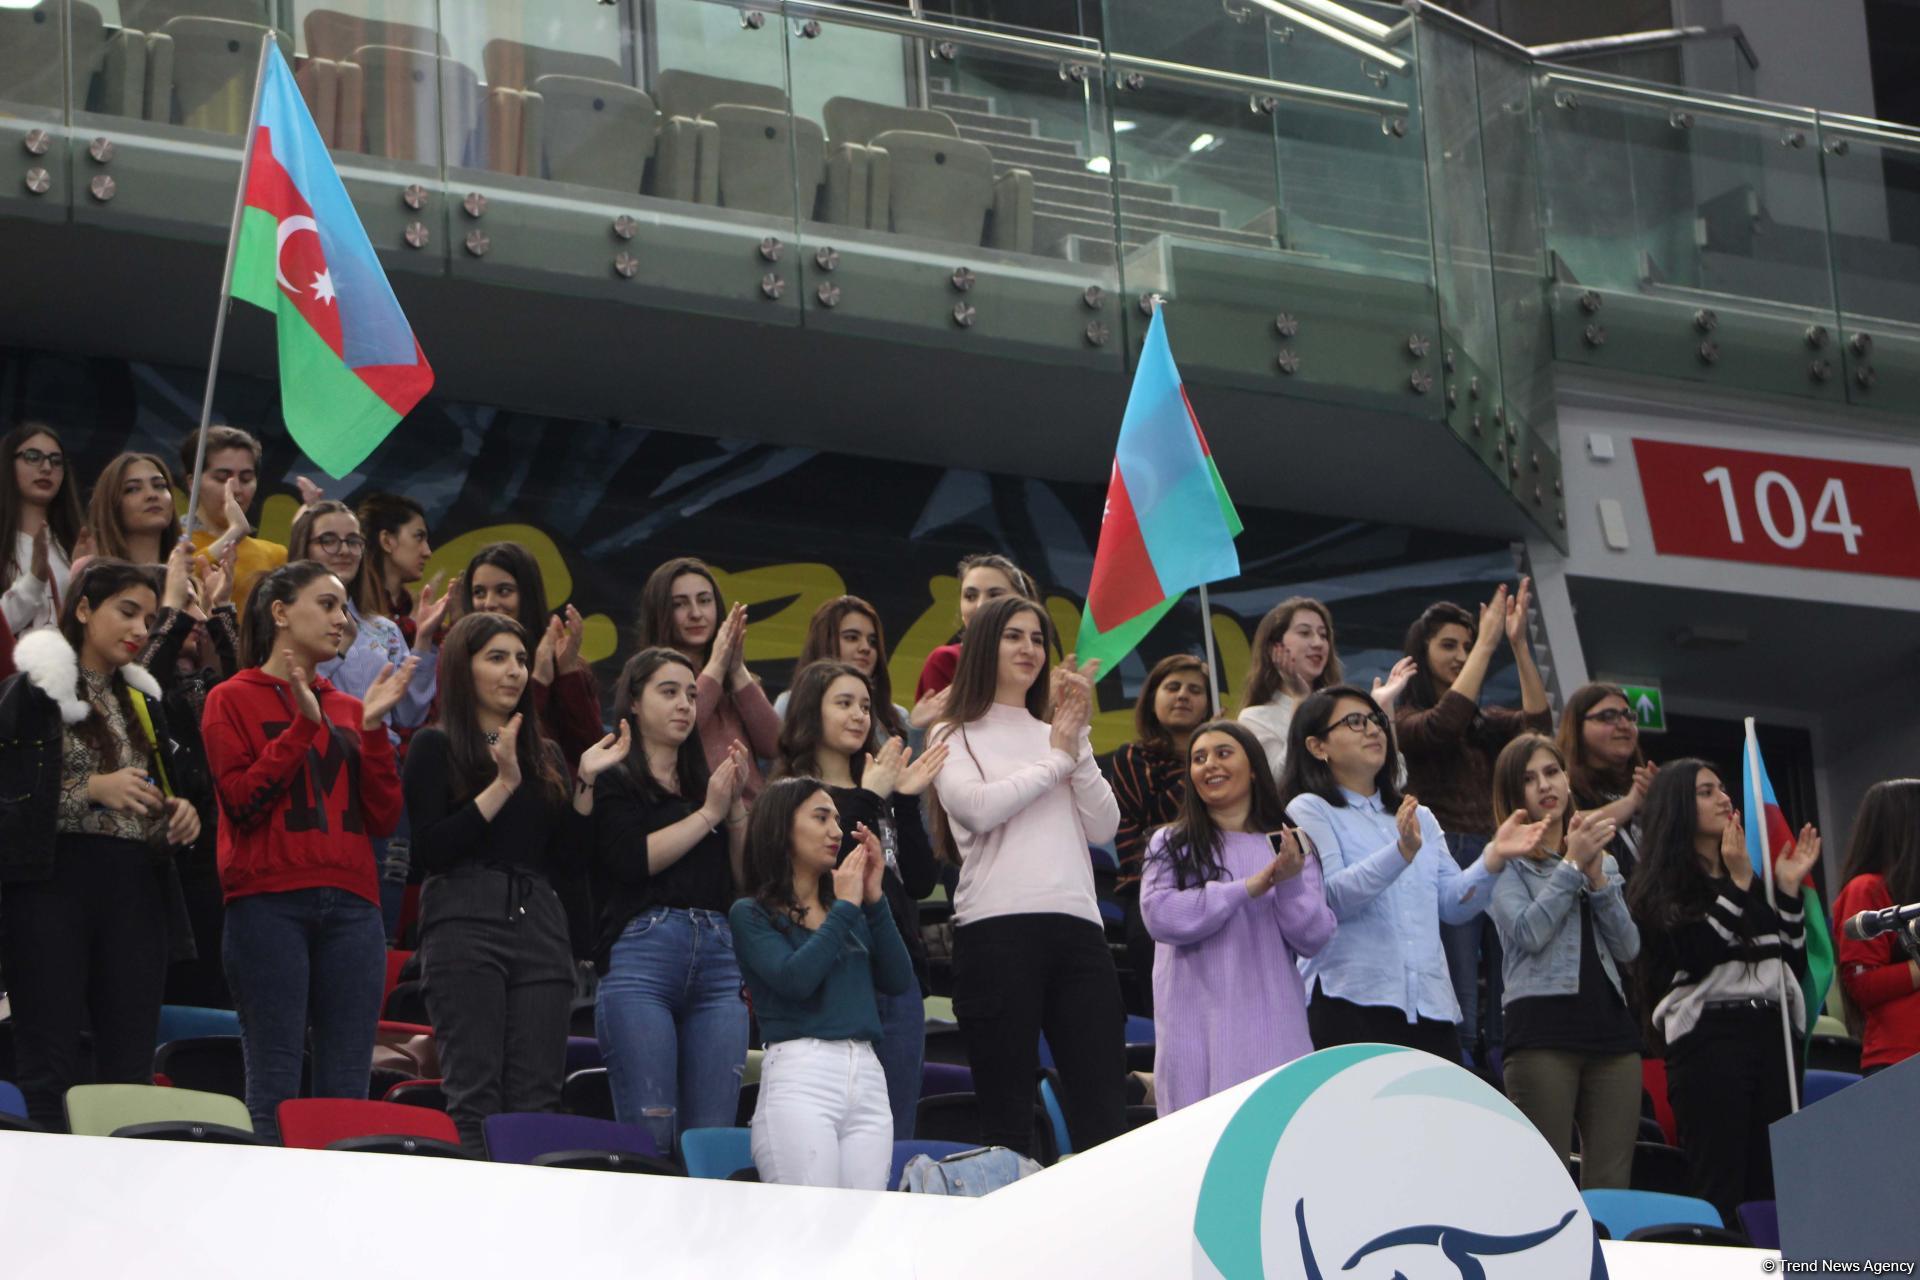 First day of FIG Artistic Gymnastics Individual Apparatus World Cup kicks off in Baku (PHOTO)